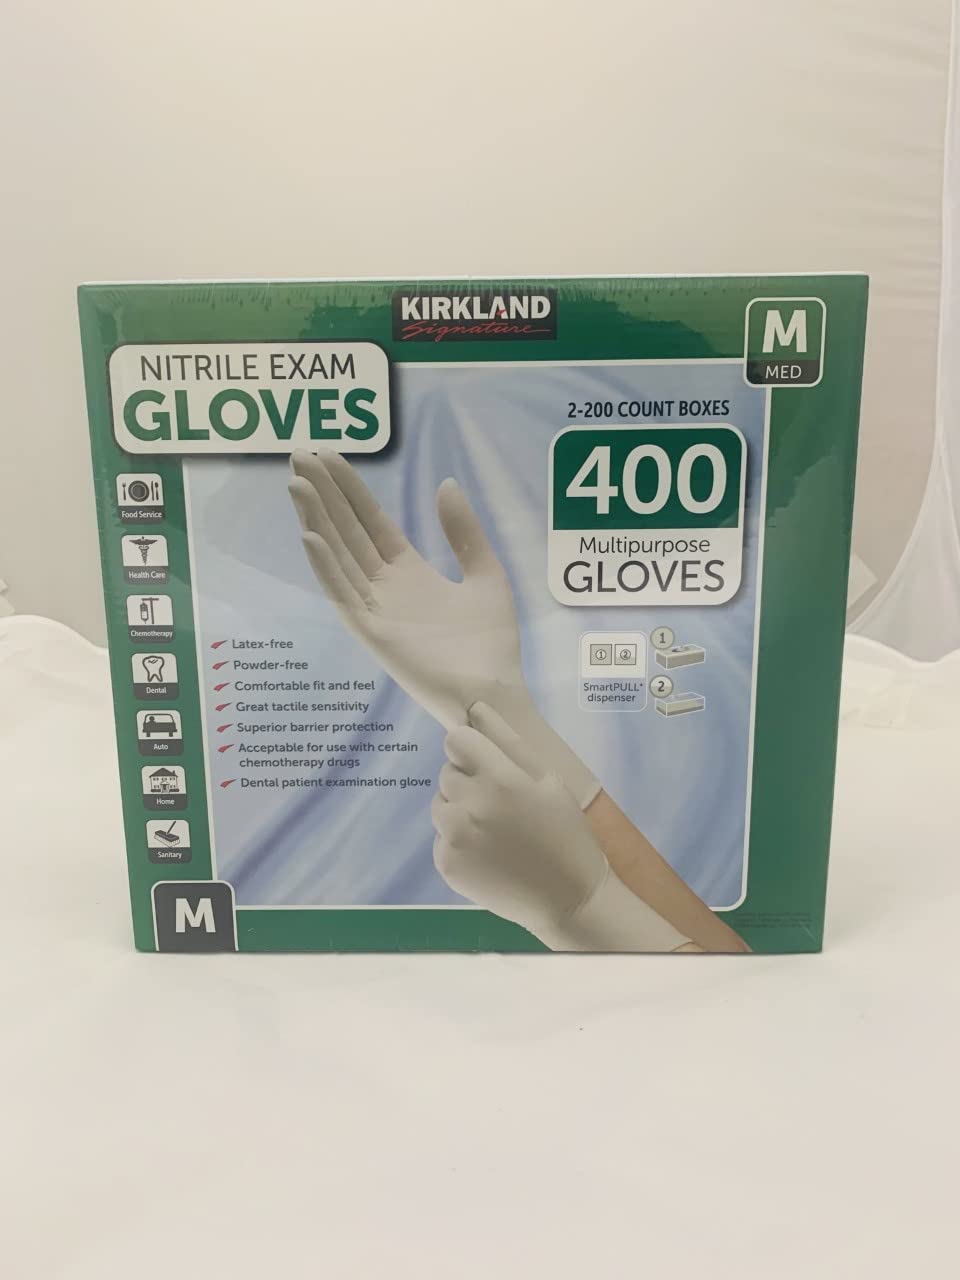 Kirkland Signature DnRbYi Nitrile Exam Multi-Purpose Medium Gloves Latex-Free, 400 Count, (467120)